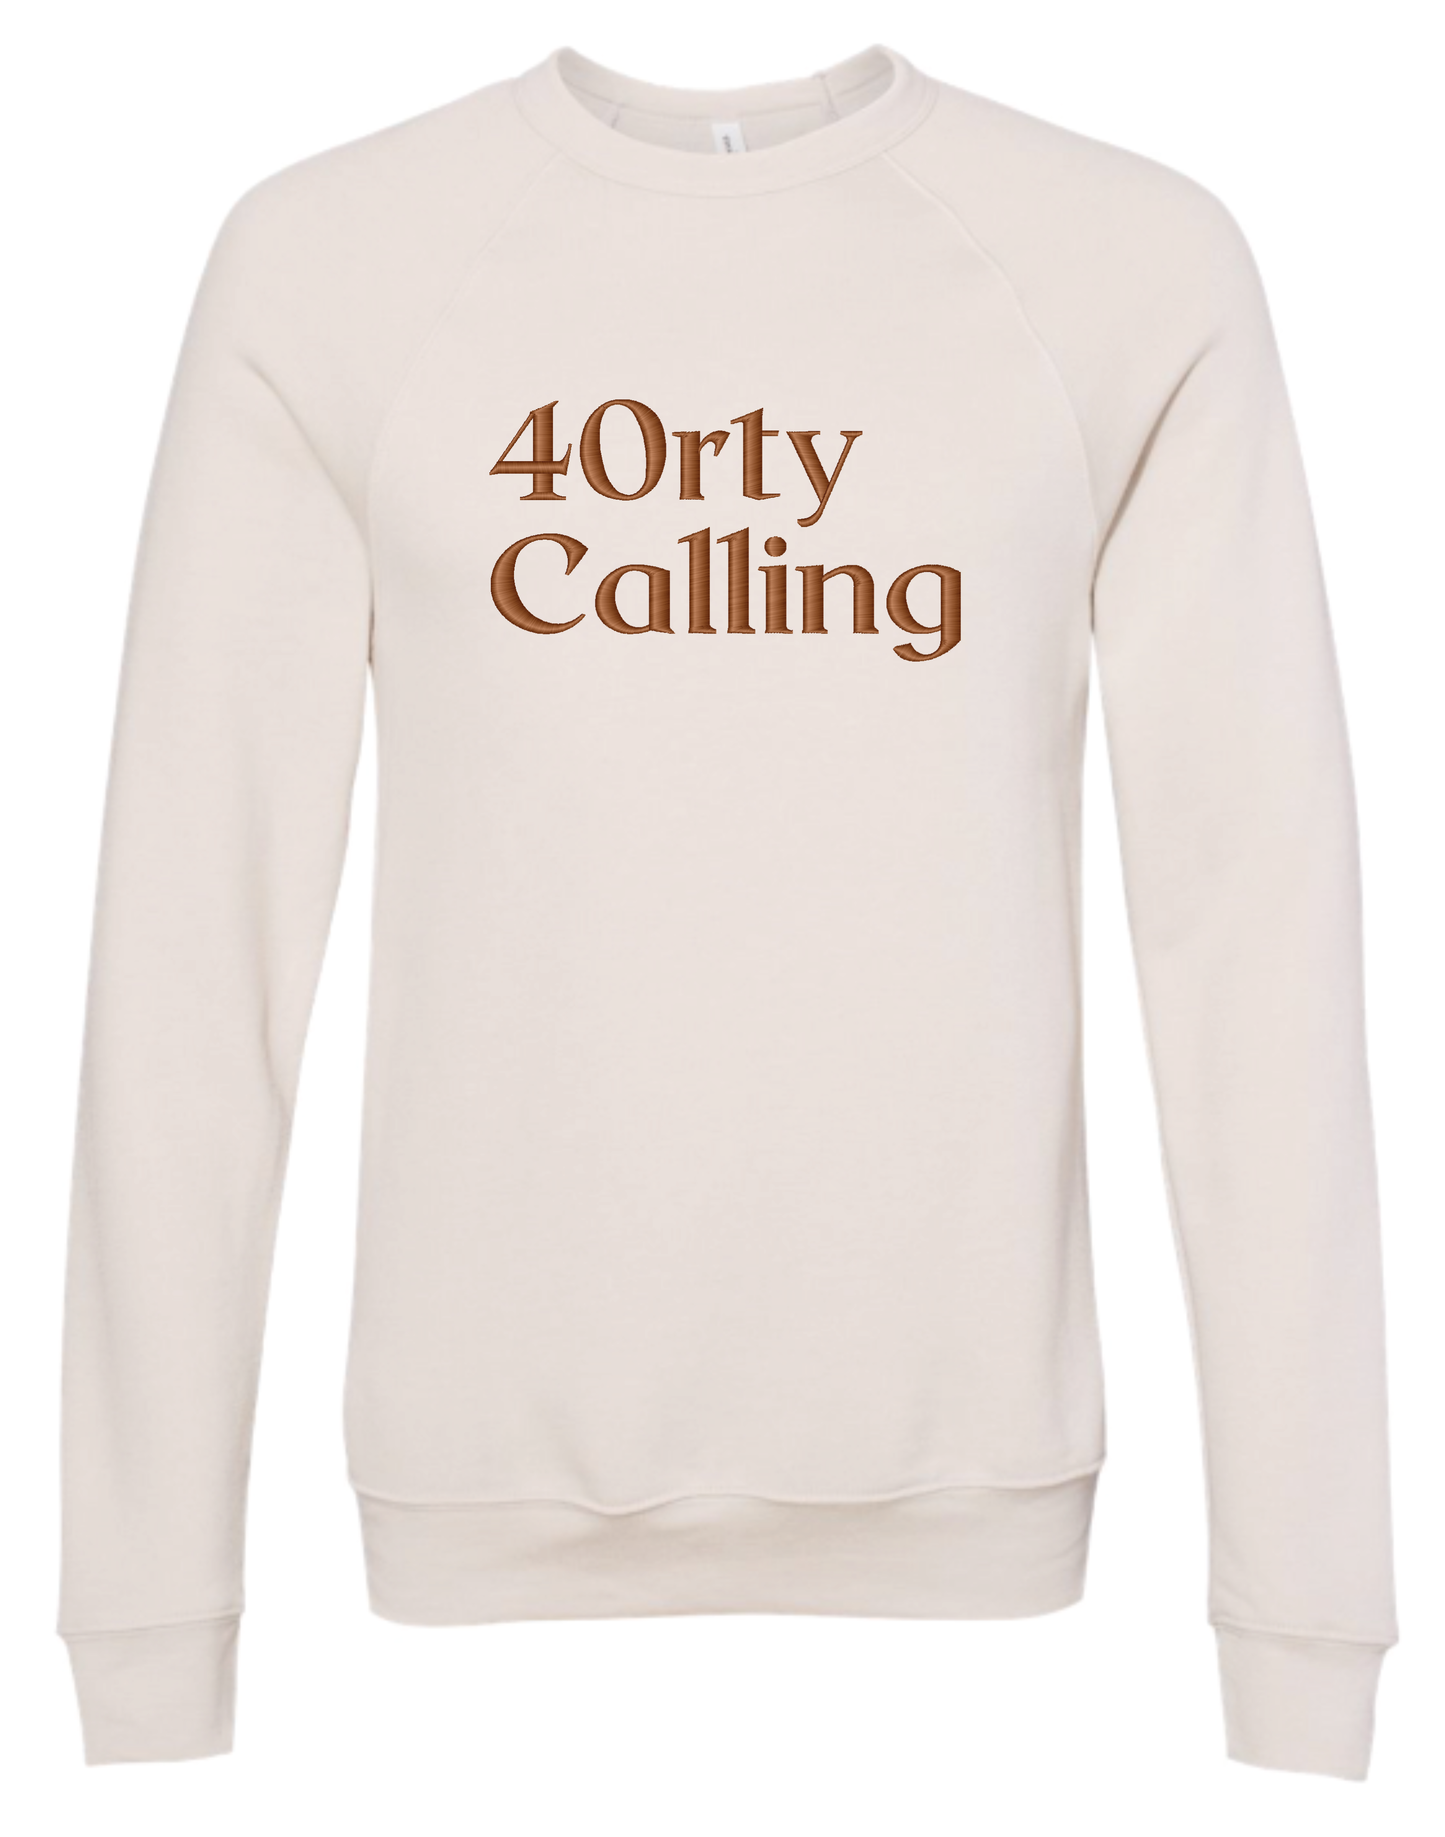 Signature 40rty Calling Embroidered Sweatshirt